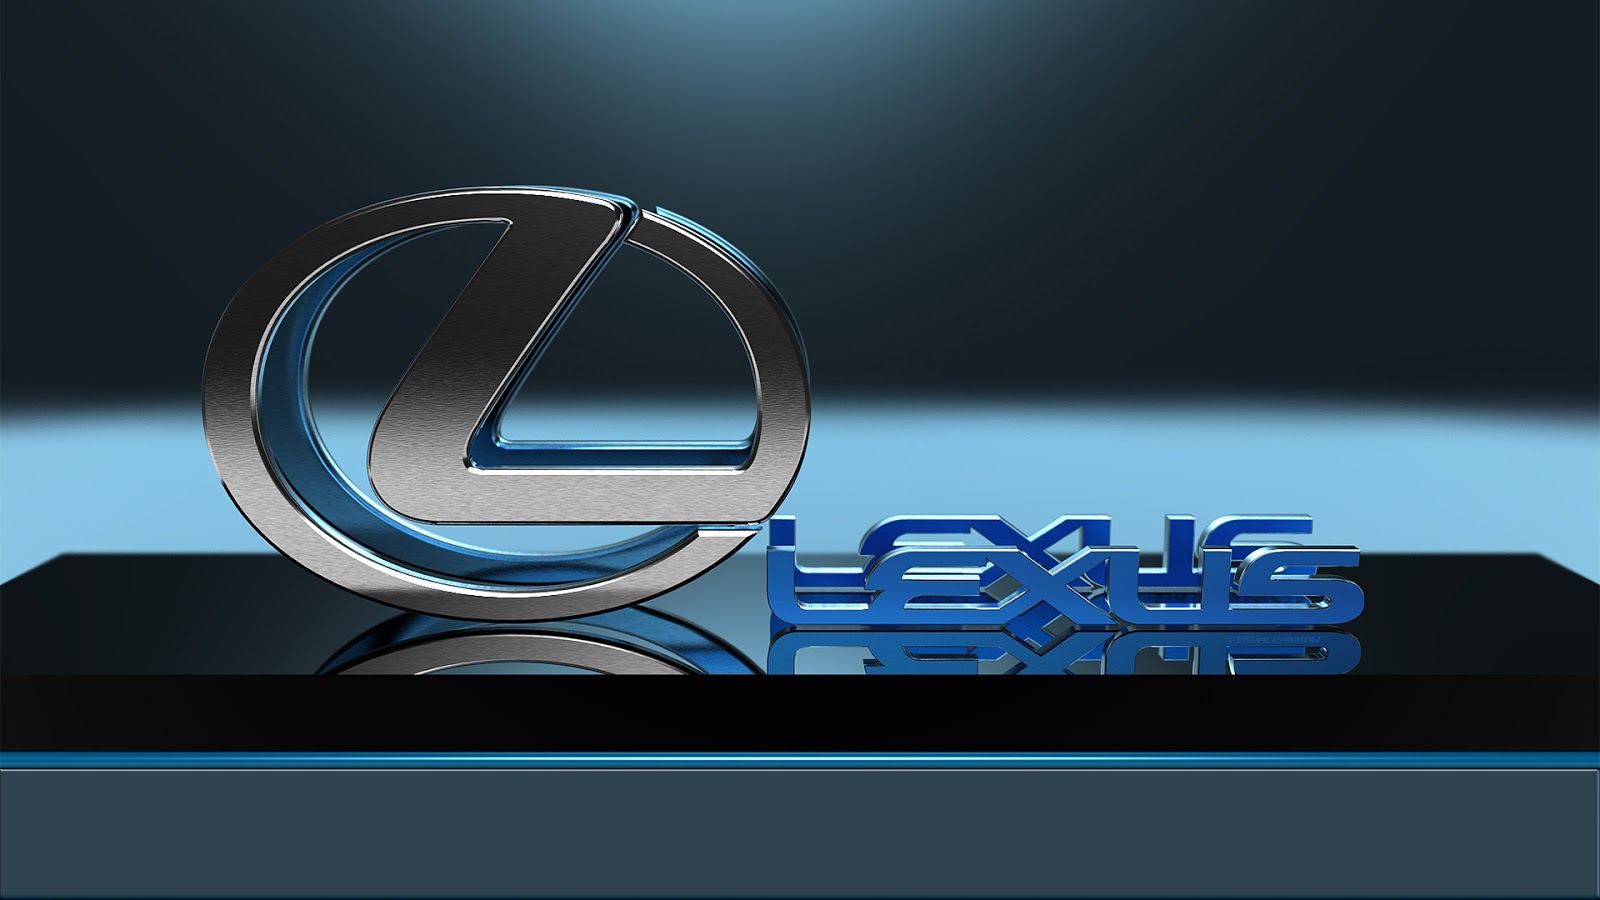 Lexus Logo Wallpaper On